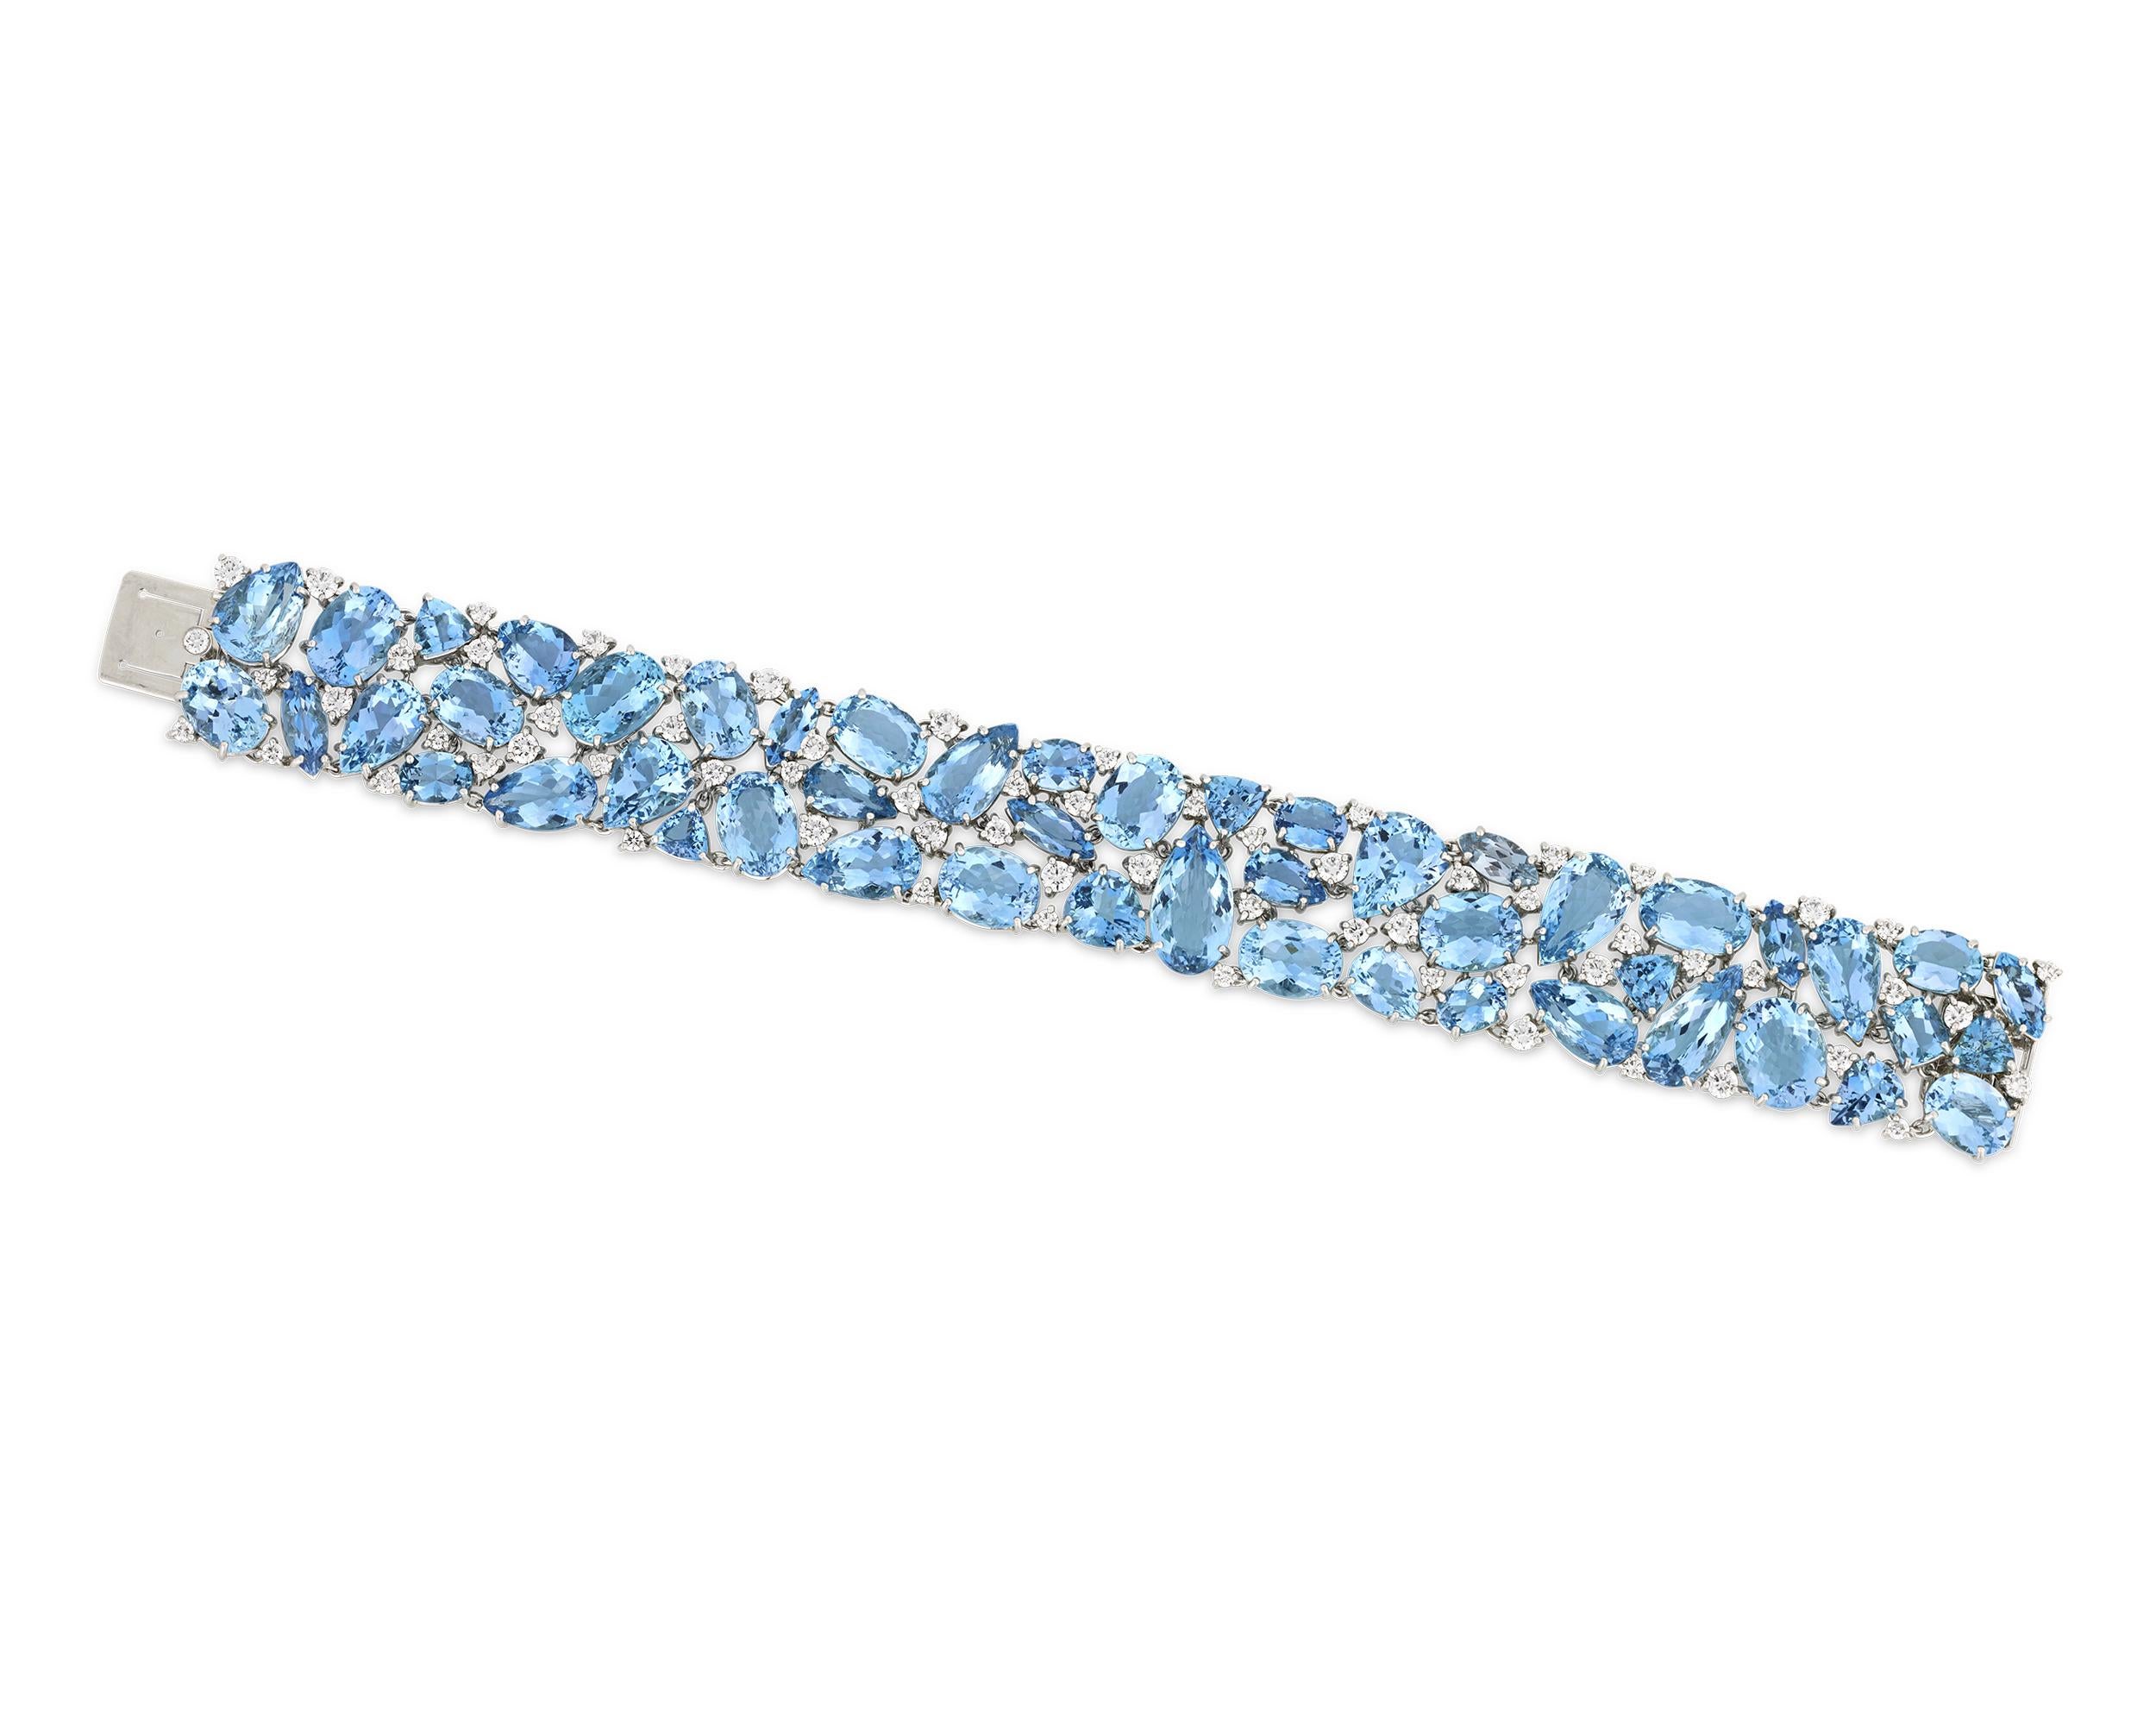 Showcasing a captivating ocean-blue hue, this aquamarine bracelet hails from the famed jeweler Oscar Heyman. Forty-nine aquamarine gemstones form the bracelet, totaling 81.86 carats. The blue jewels are interspersed with sixty-five round diamonds